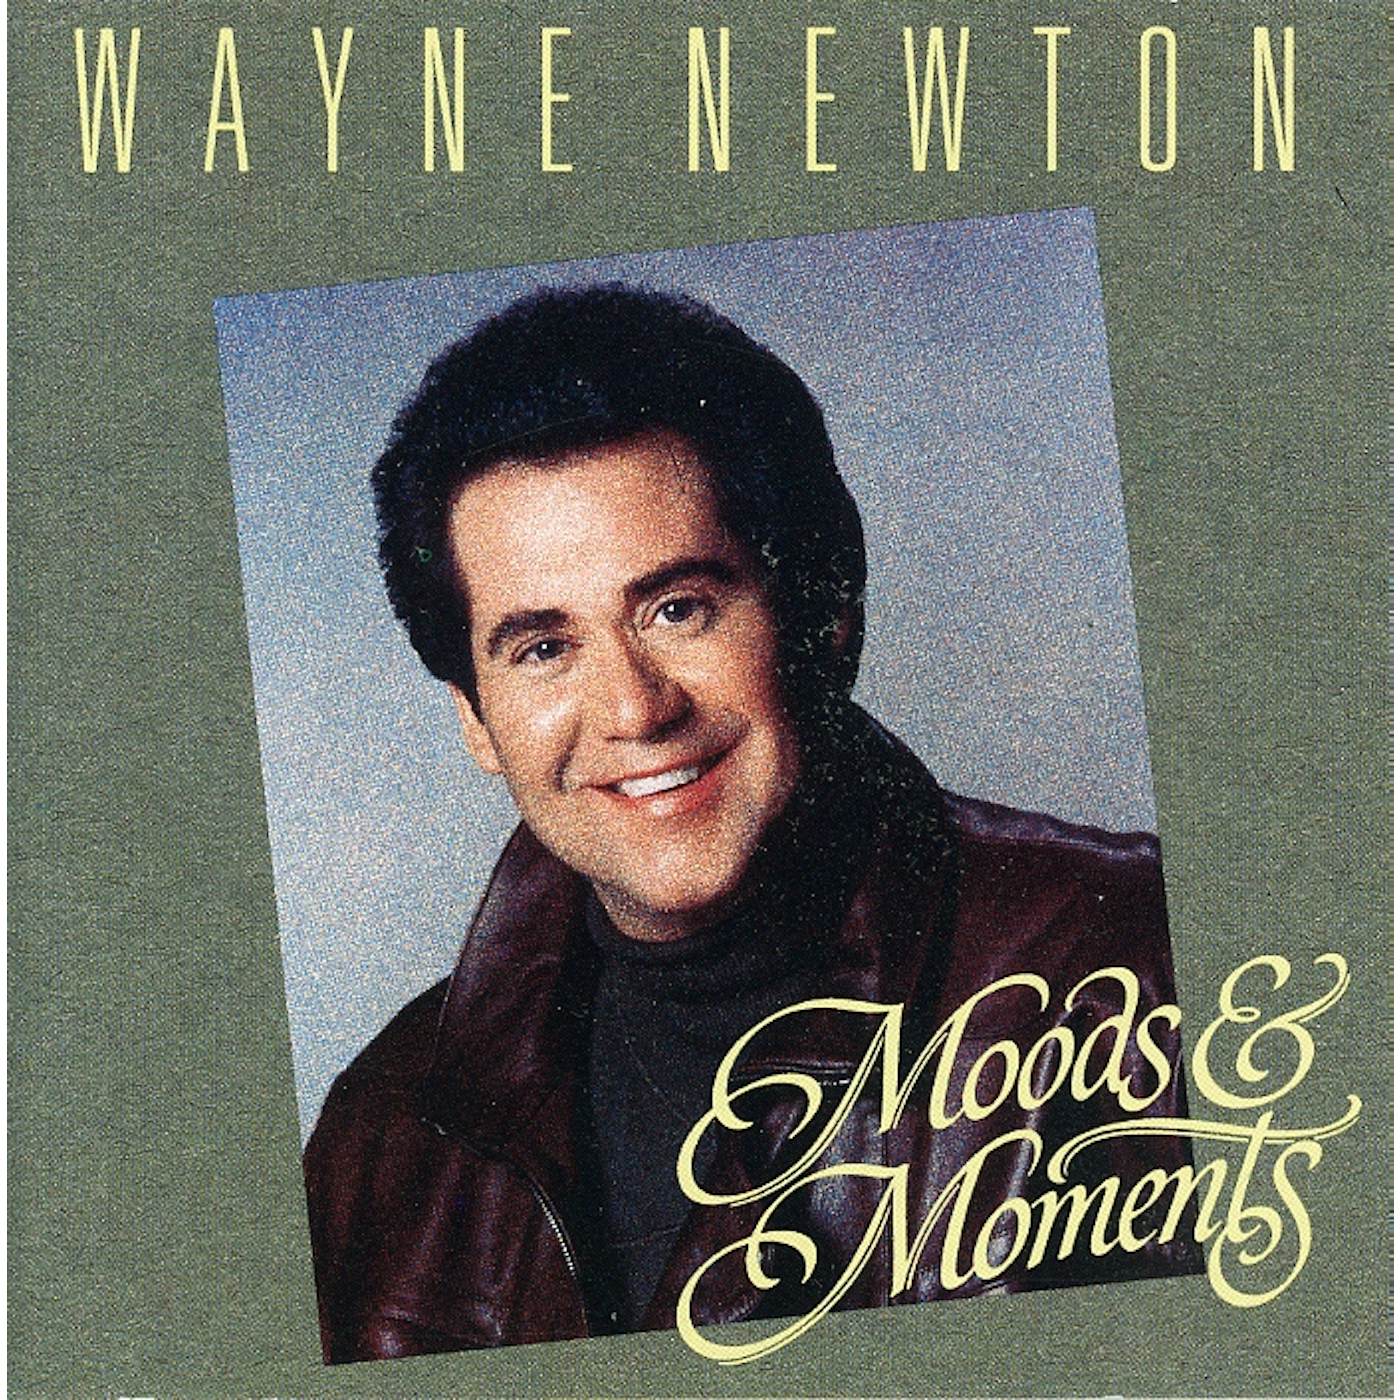 Wayne Newton MOODS & MOMENTS CD